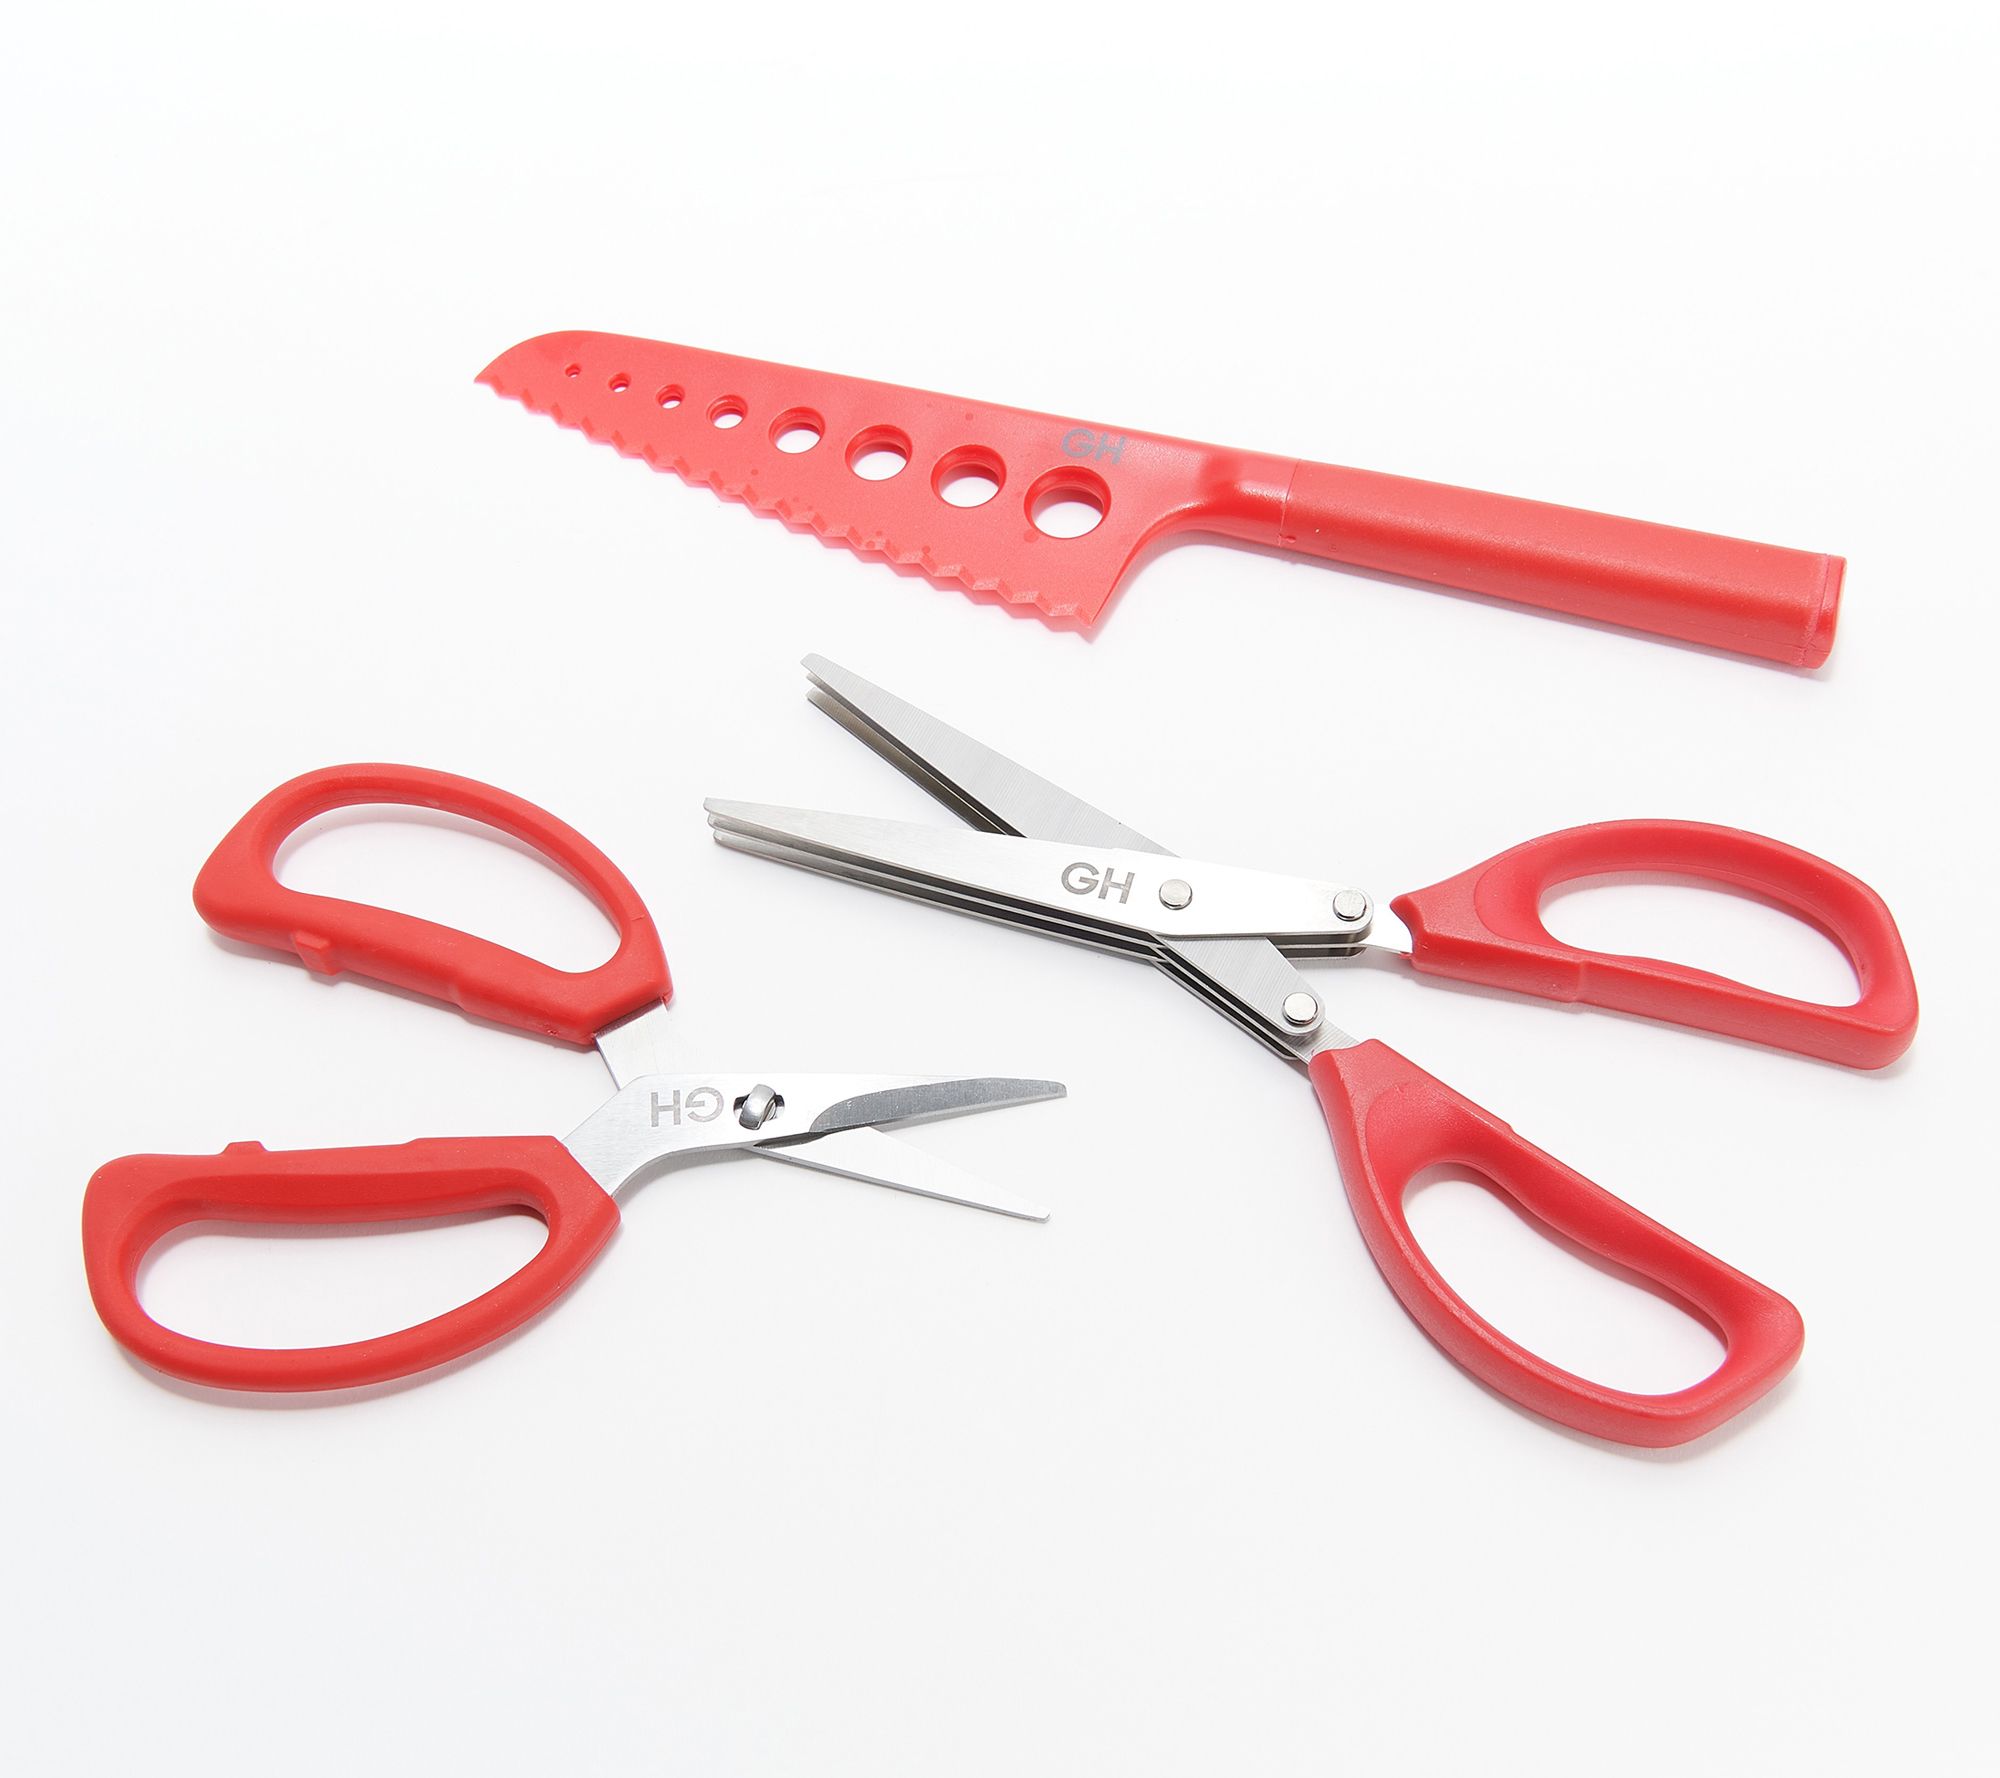 BergHOFF Studio Series 4-Piece Kitchen Scissors Set